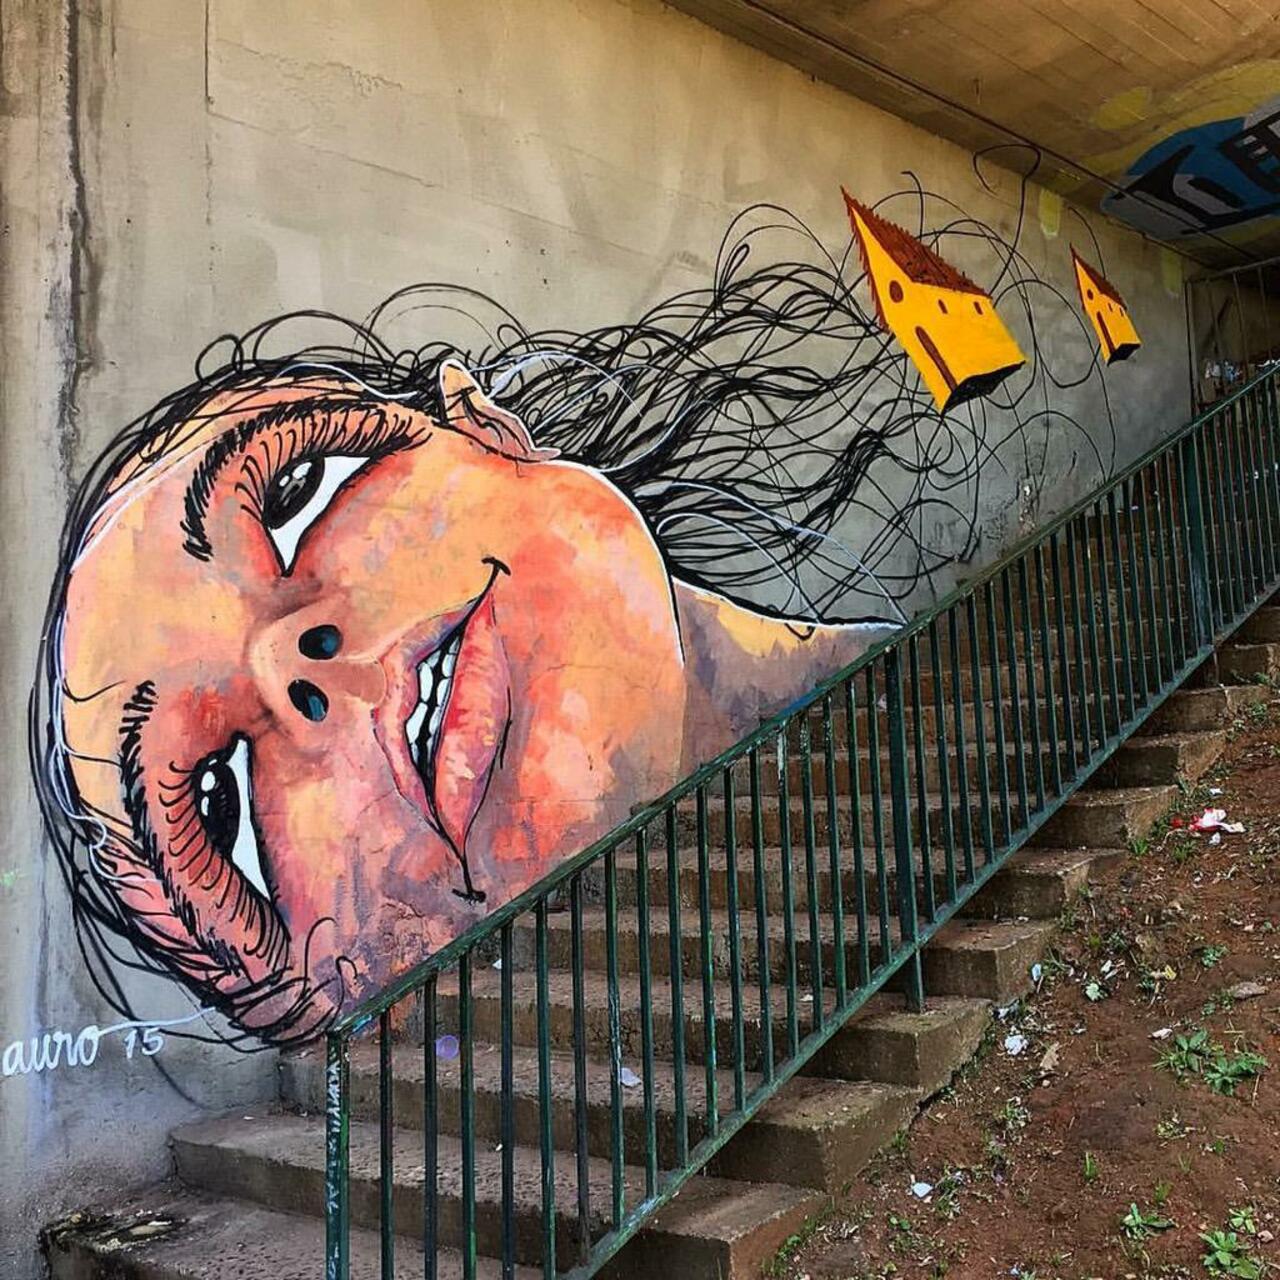 Street Art by Reveracidade in São Paulo 

#art #graffiti #mural #streetart http://t.co/FIs2isLUZn